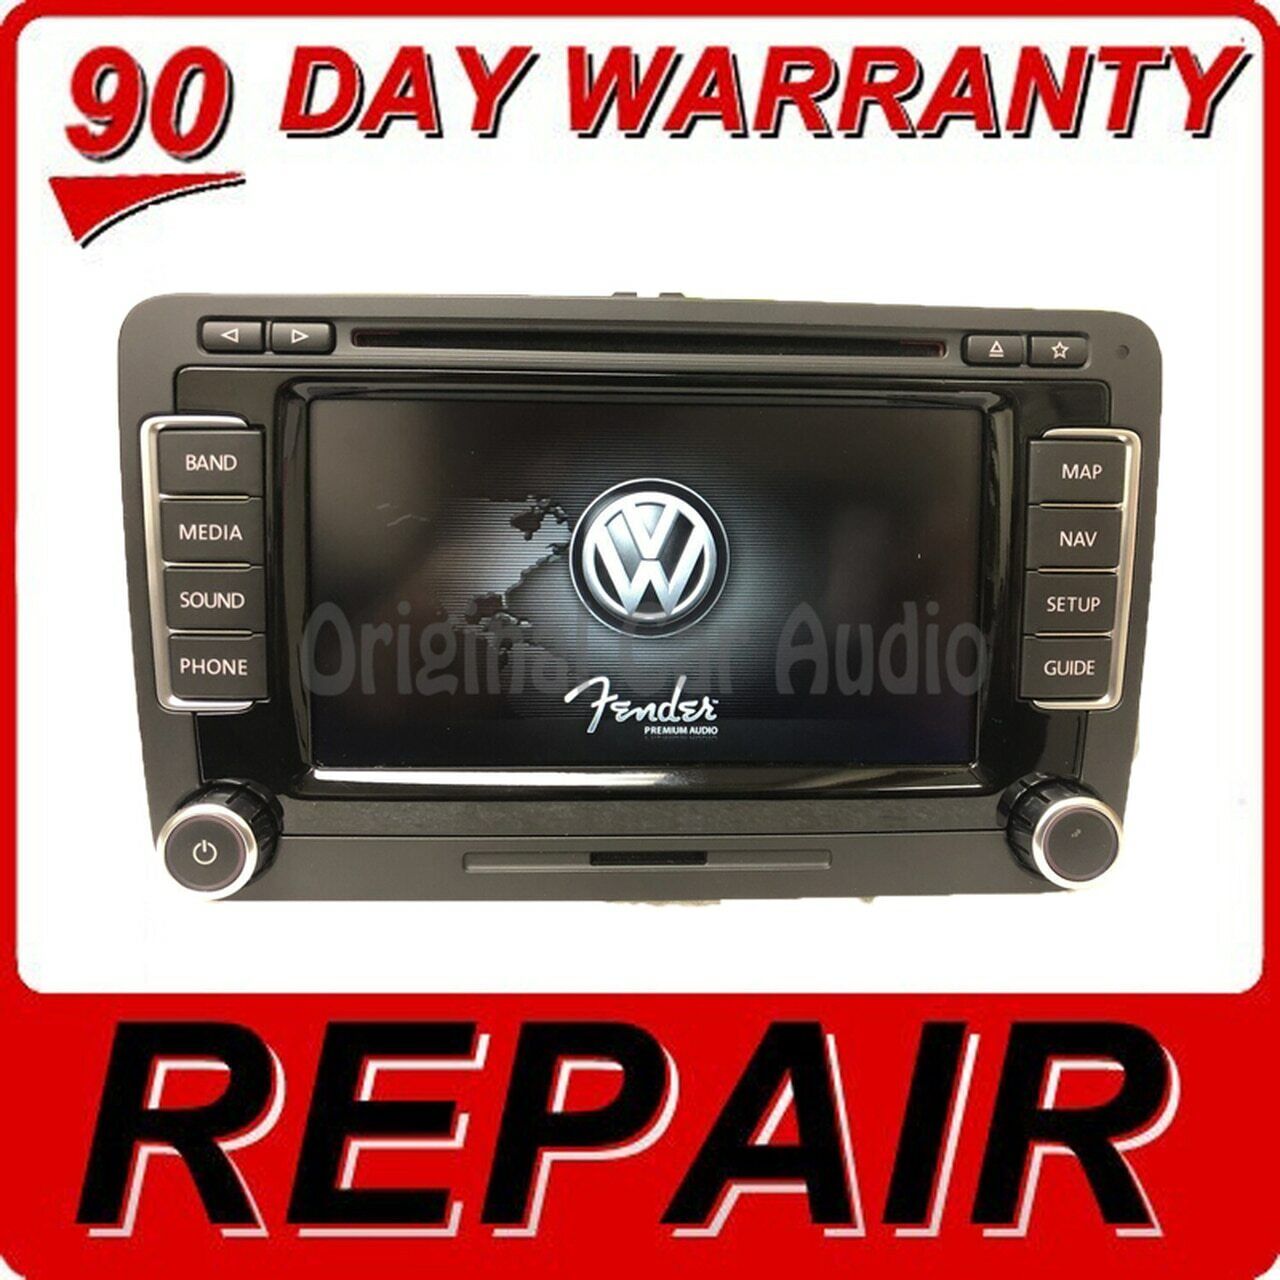 Repair Service 2010 - 2015 VW Fender OEM Navigation Radio Mainboard Repair